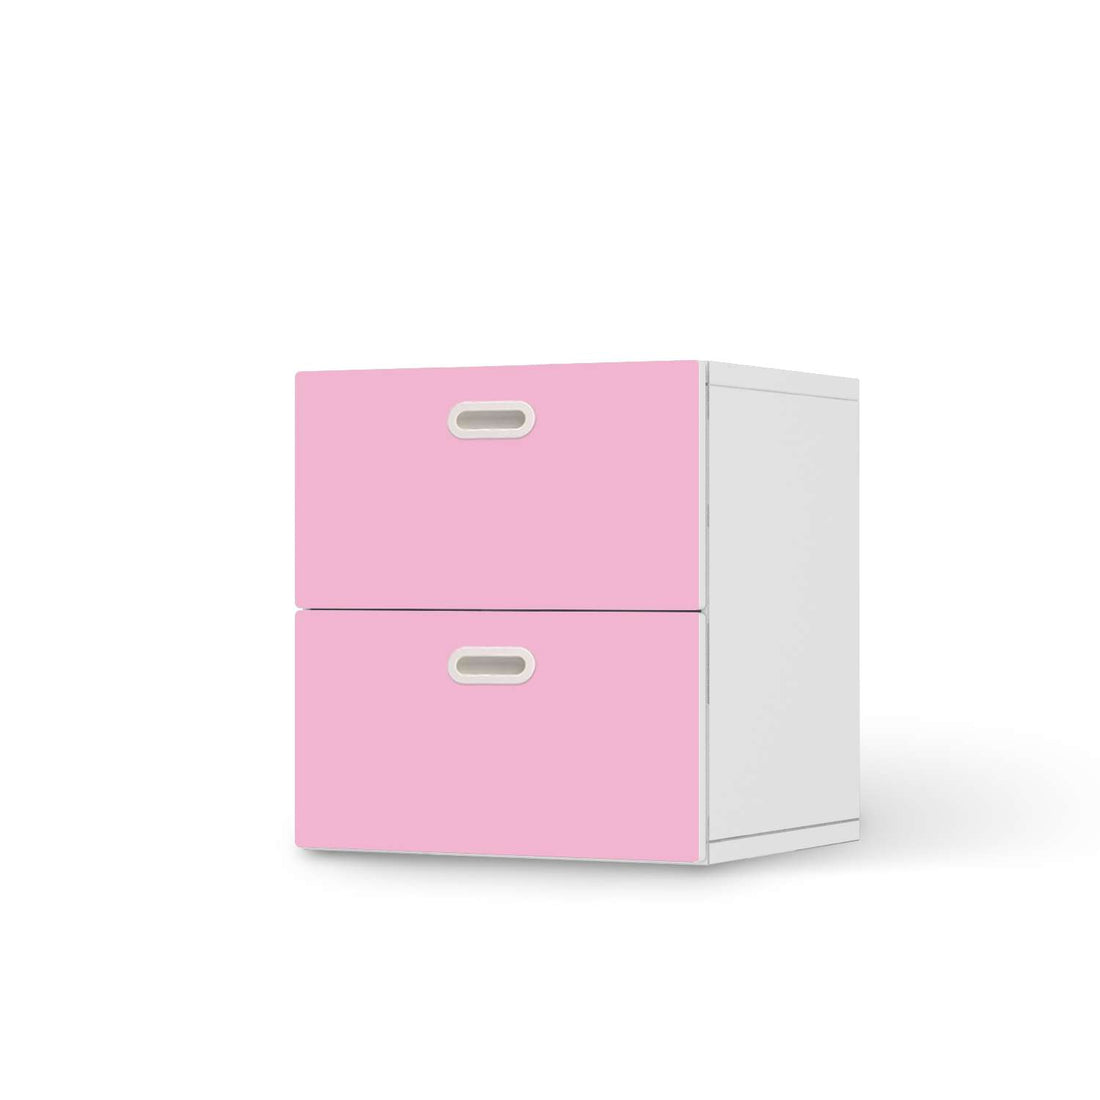 Klebefolie für Möbel Pink Light - IKEA Stuva / Fritids Kommode - 2 Schubladen  - weiss